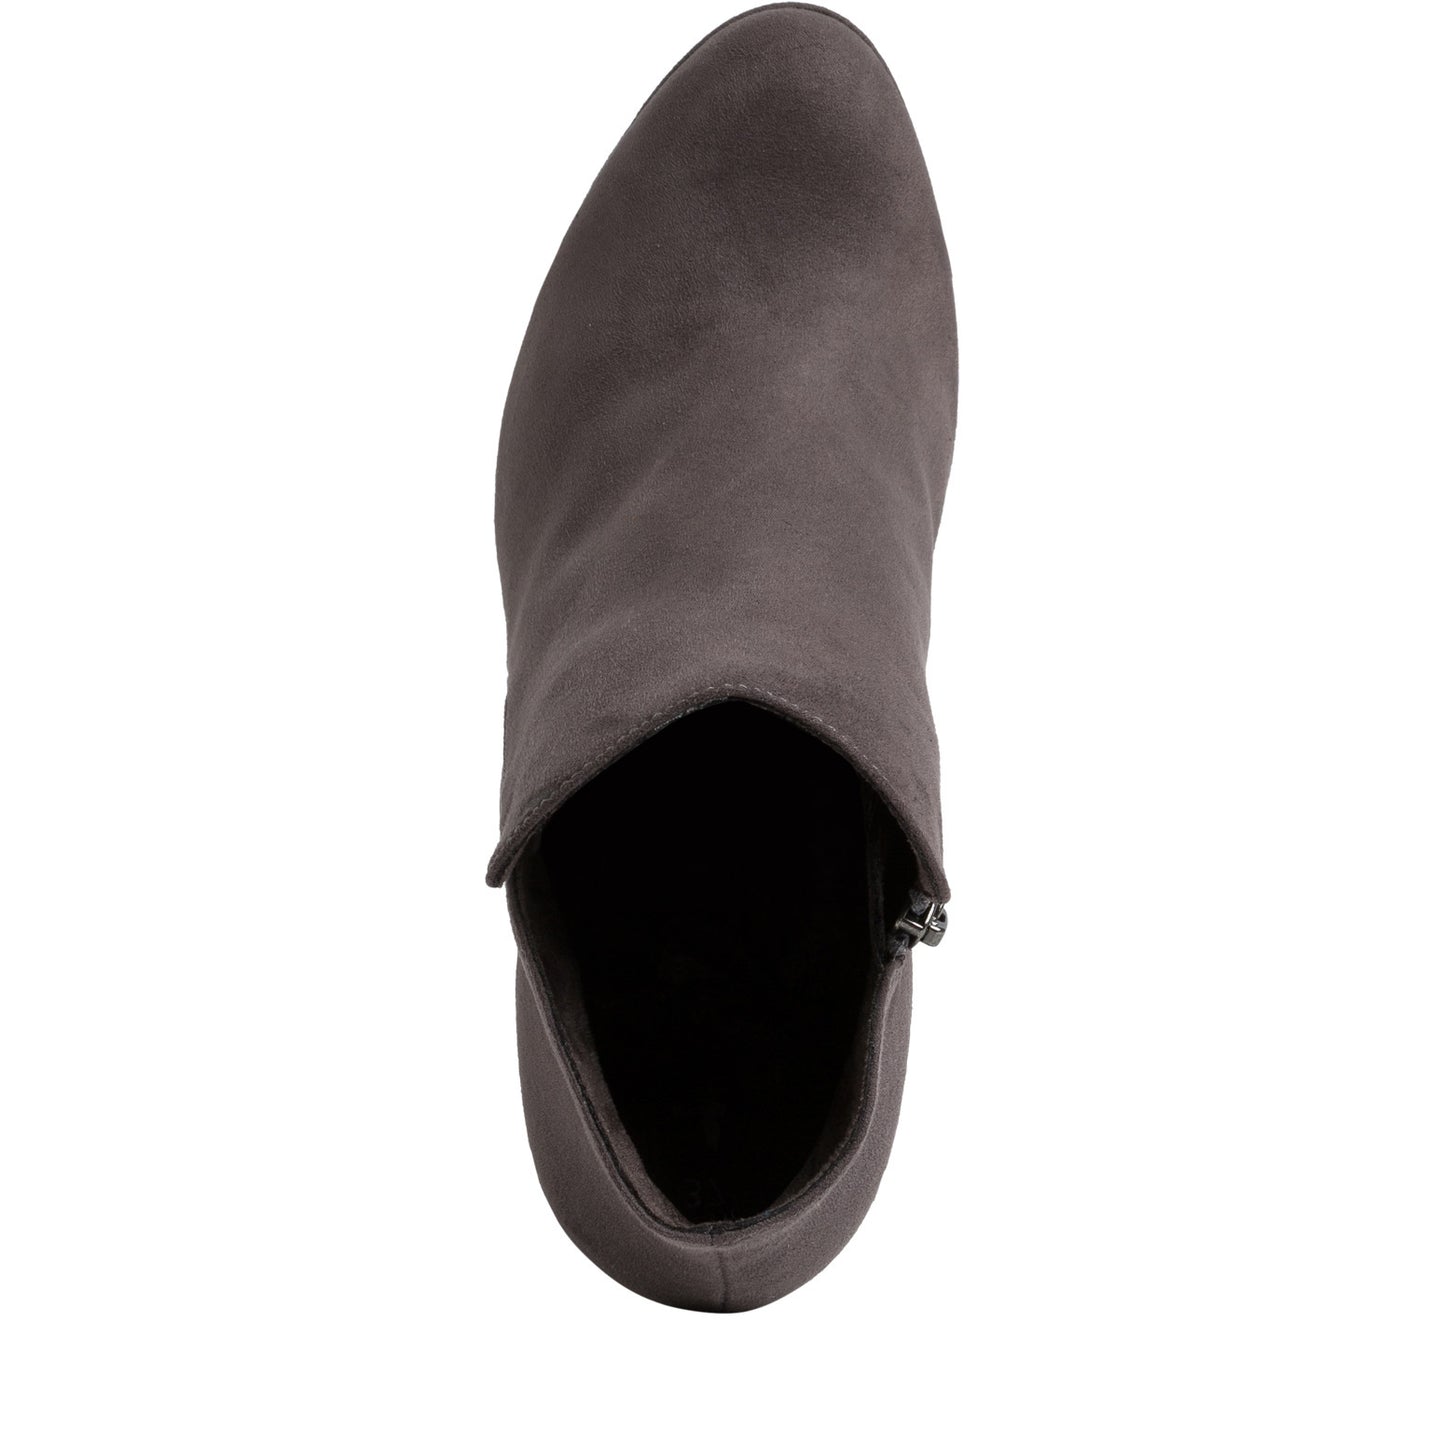 Tamaris - 25316 - Grey High Heeled Shoe Boot in Suede Effect Finish